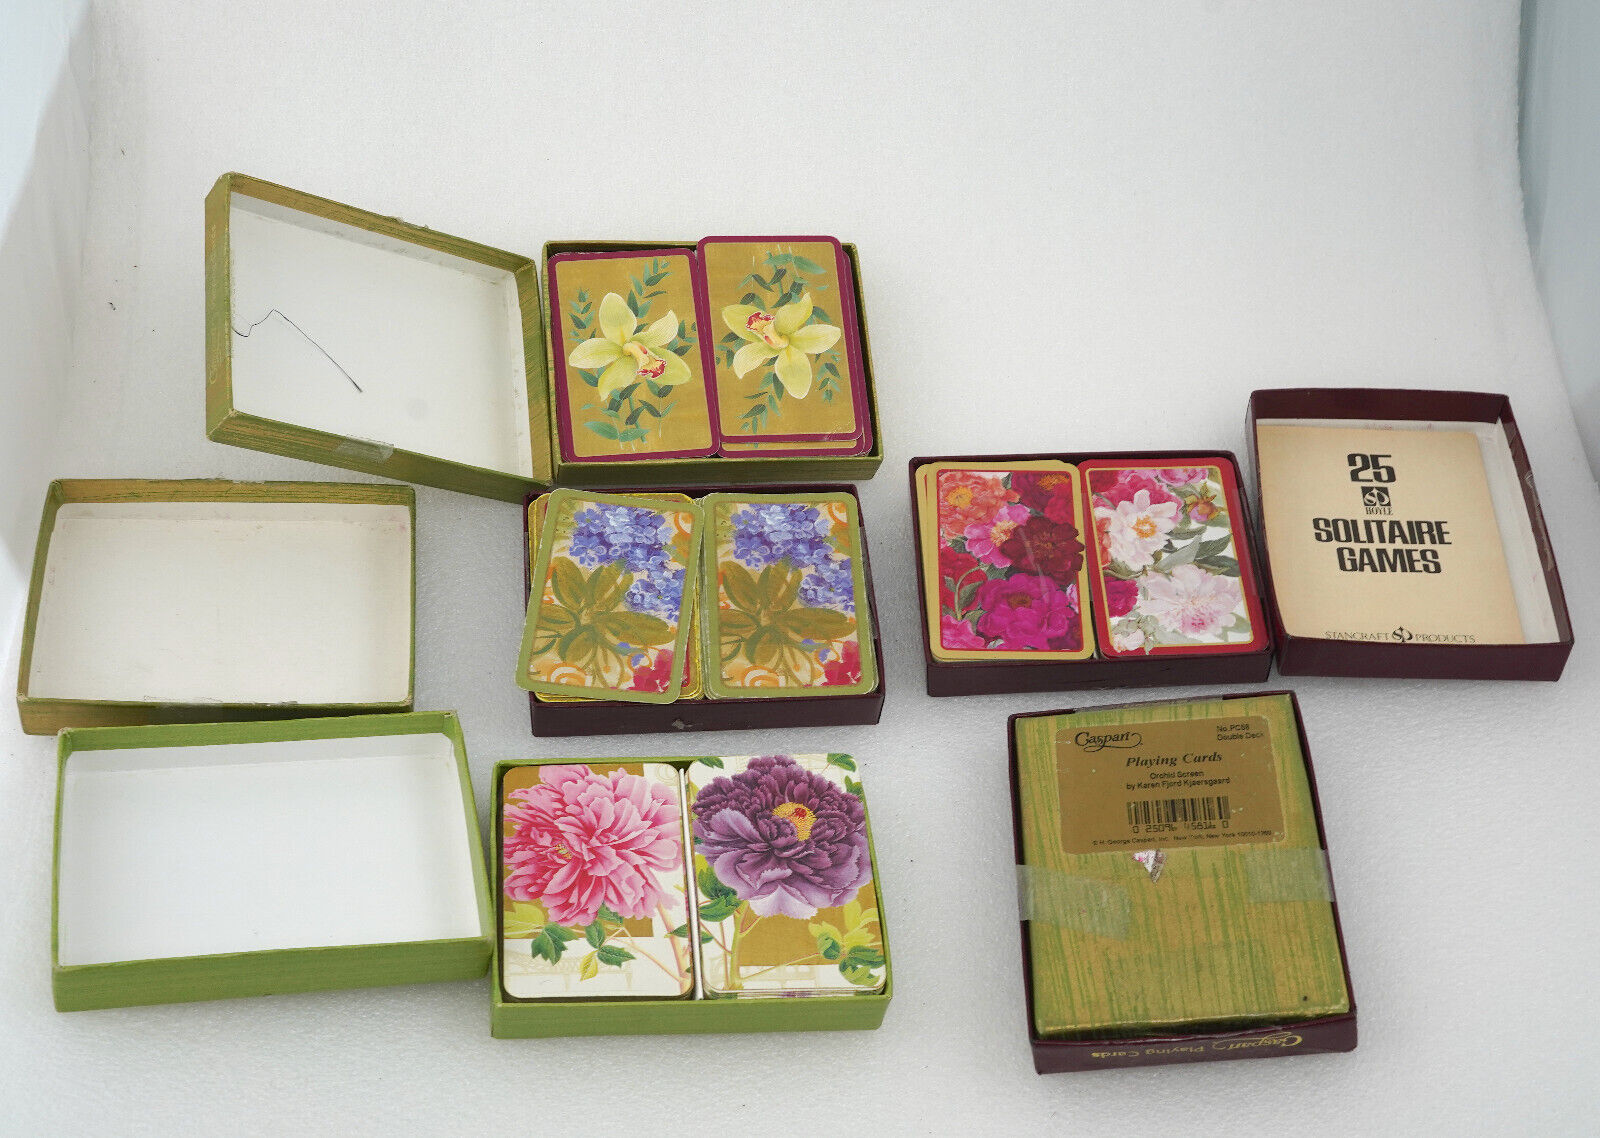 Caspari Flowers (Monet) Vintage Playing Cards 5 Decks Display Fun Games